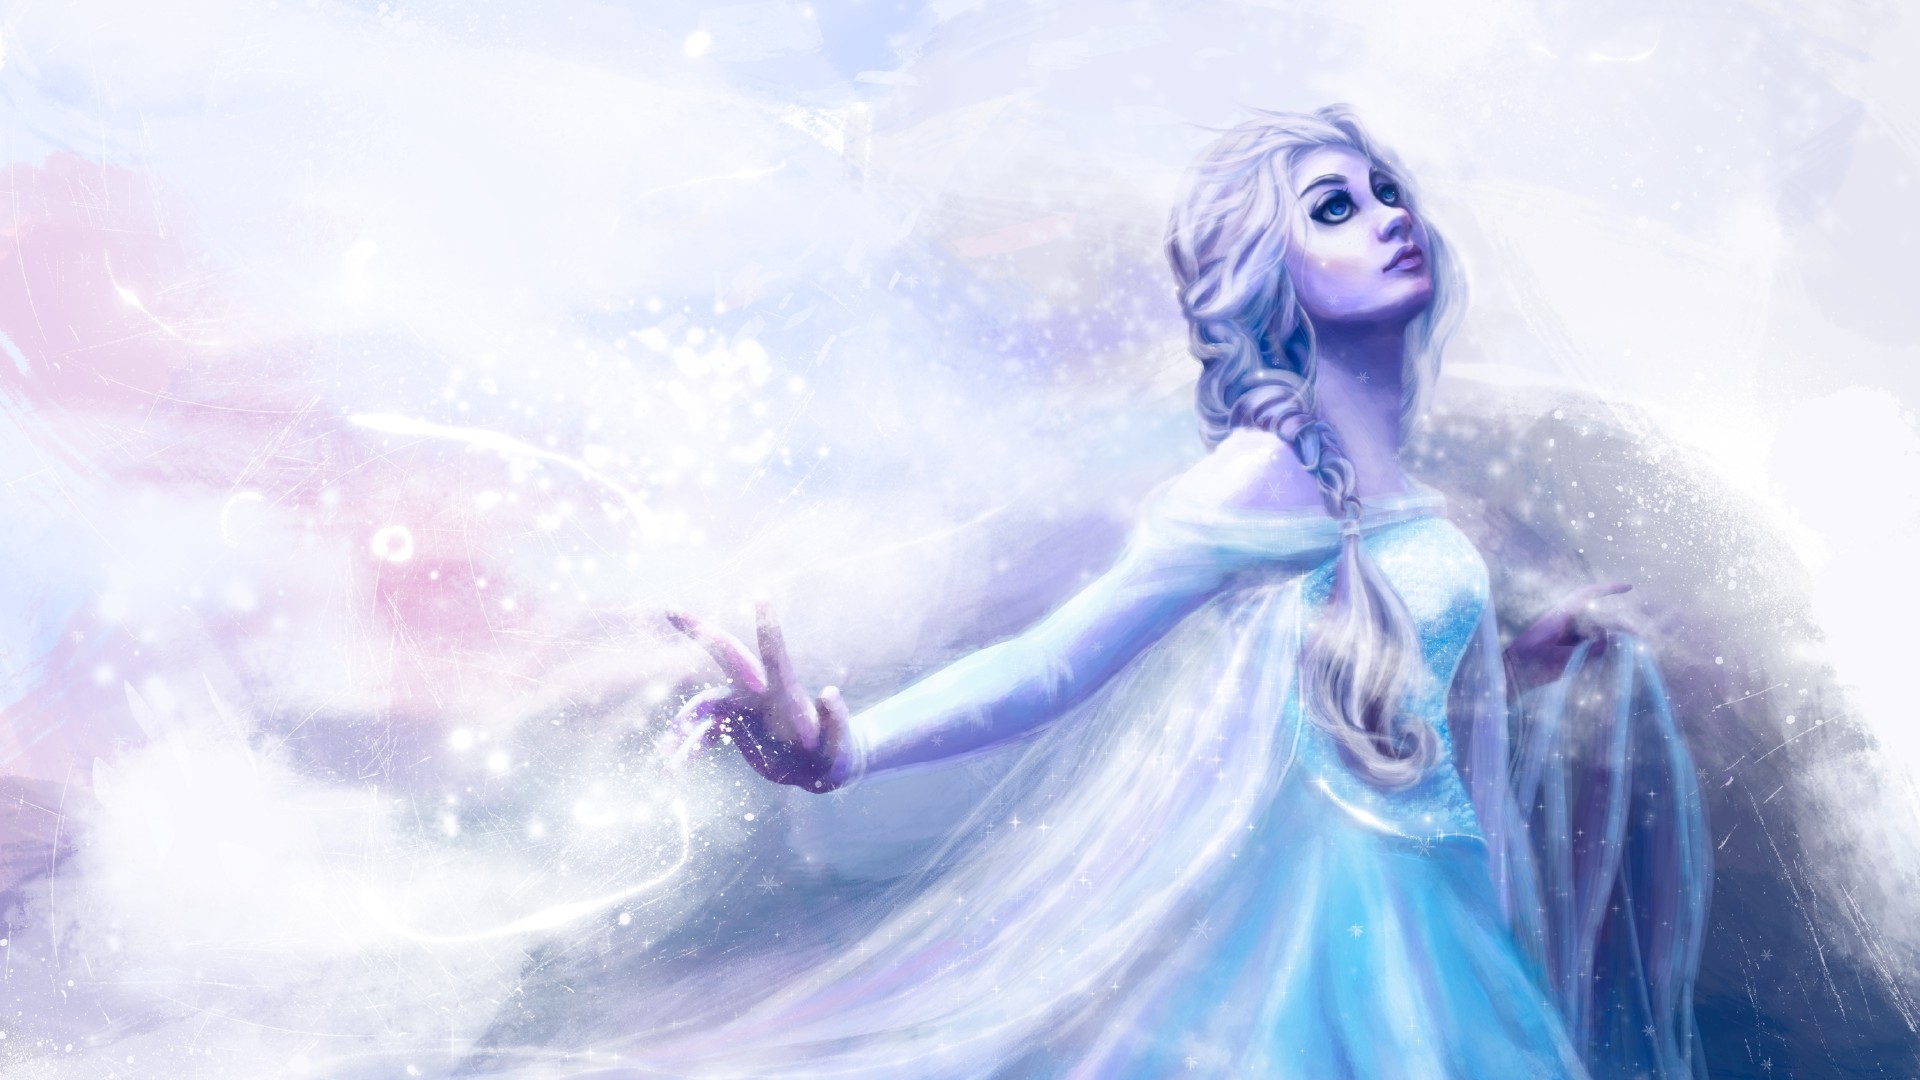 General 1920x1080 Elsa Frozen (movie) artwork fantasy art fantasy girl women long hair dress blue dress looking up